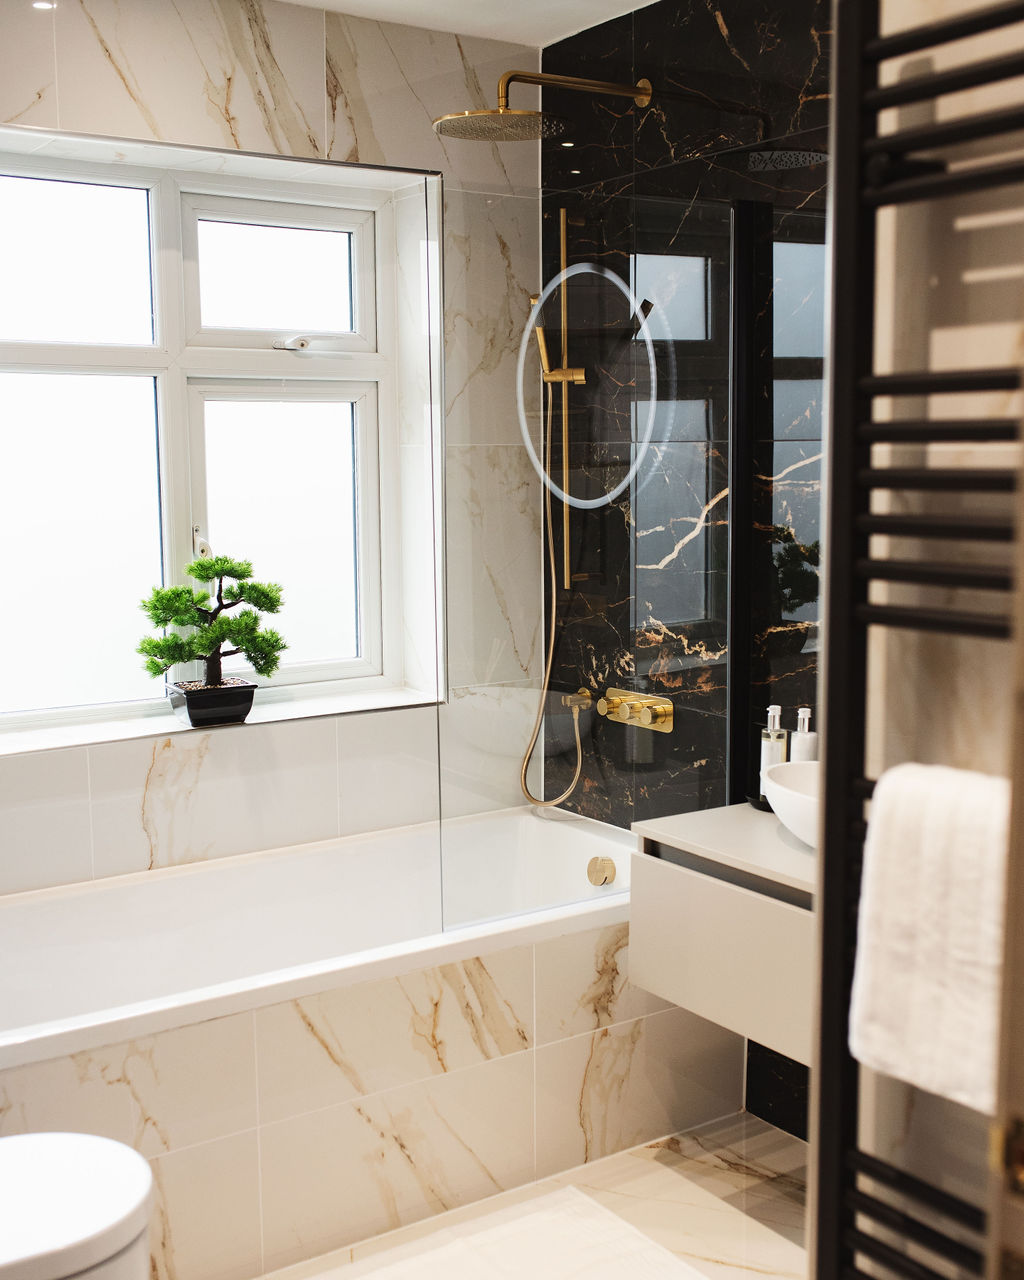 interior design case study image of a cream and black marble bathroom